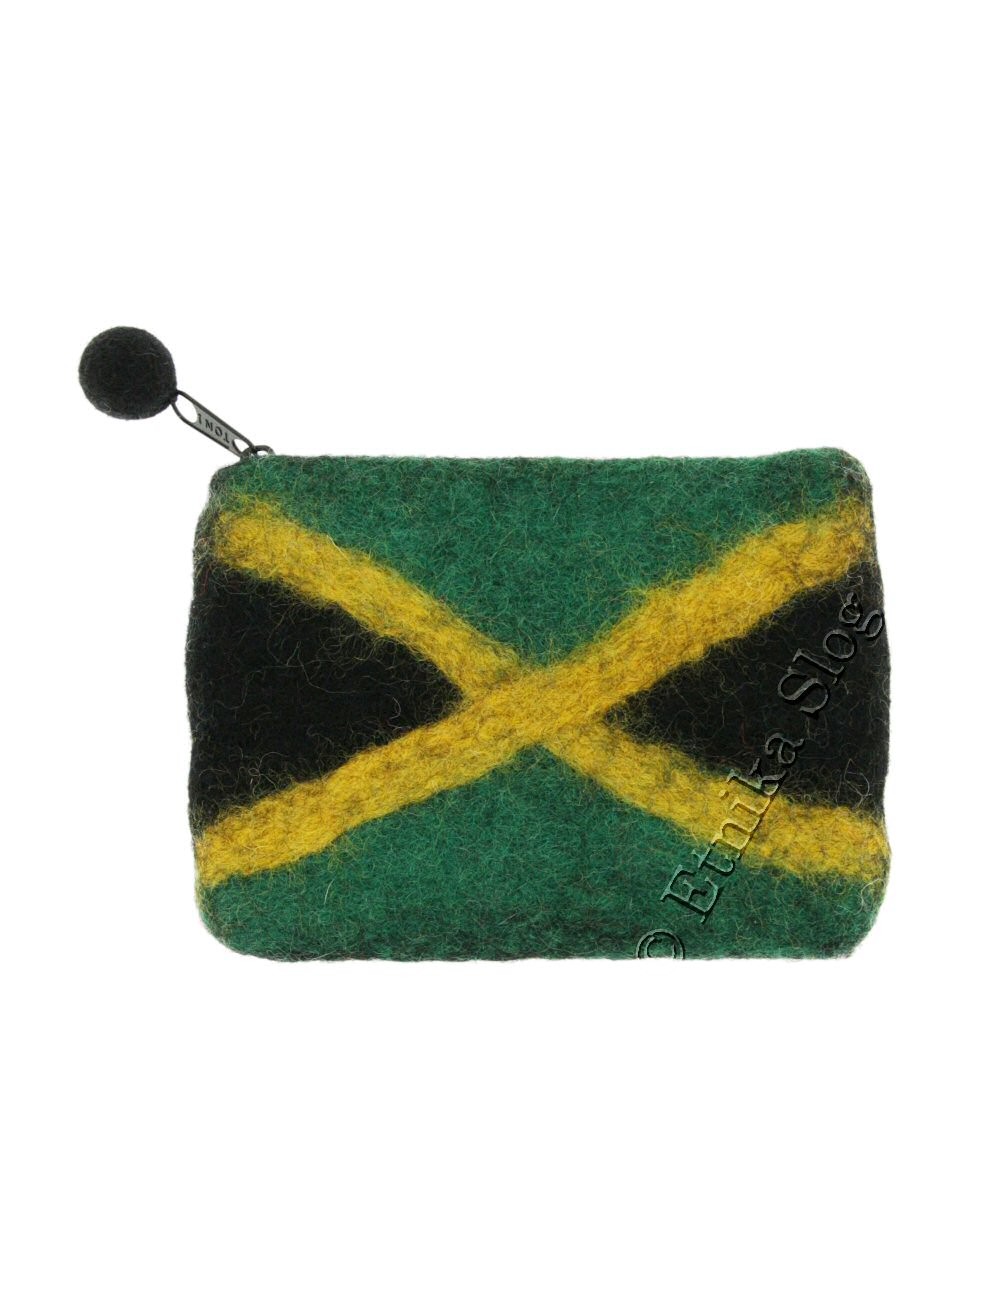 CHANGE PURSE MADE OF FELT, MOTIVE FLAG OF JAMAICA, WITH ZIPP